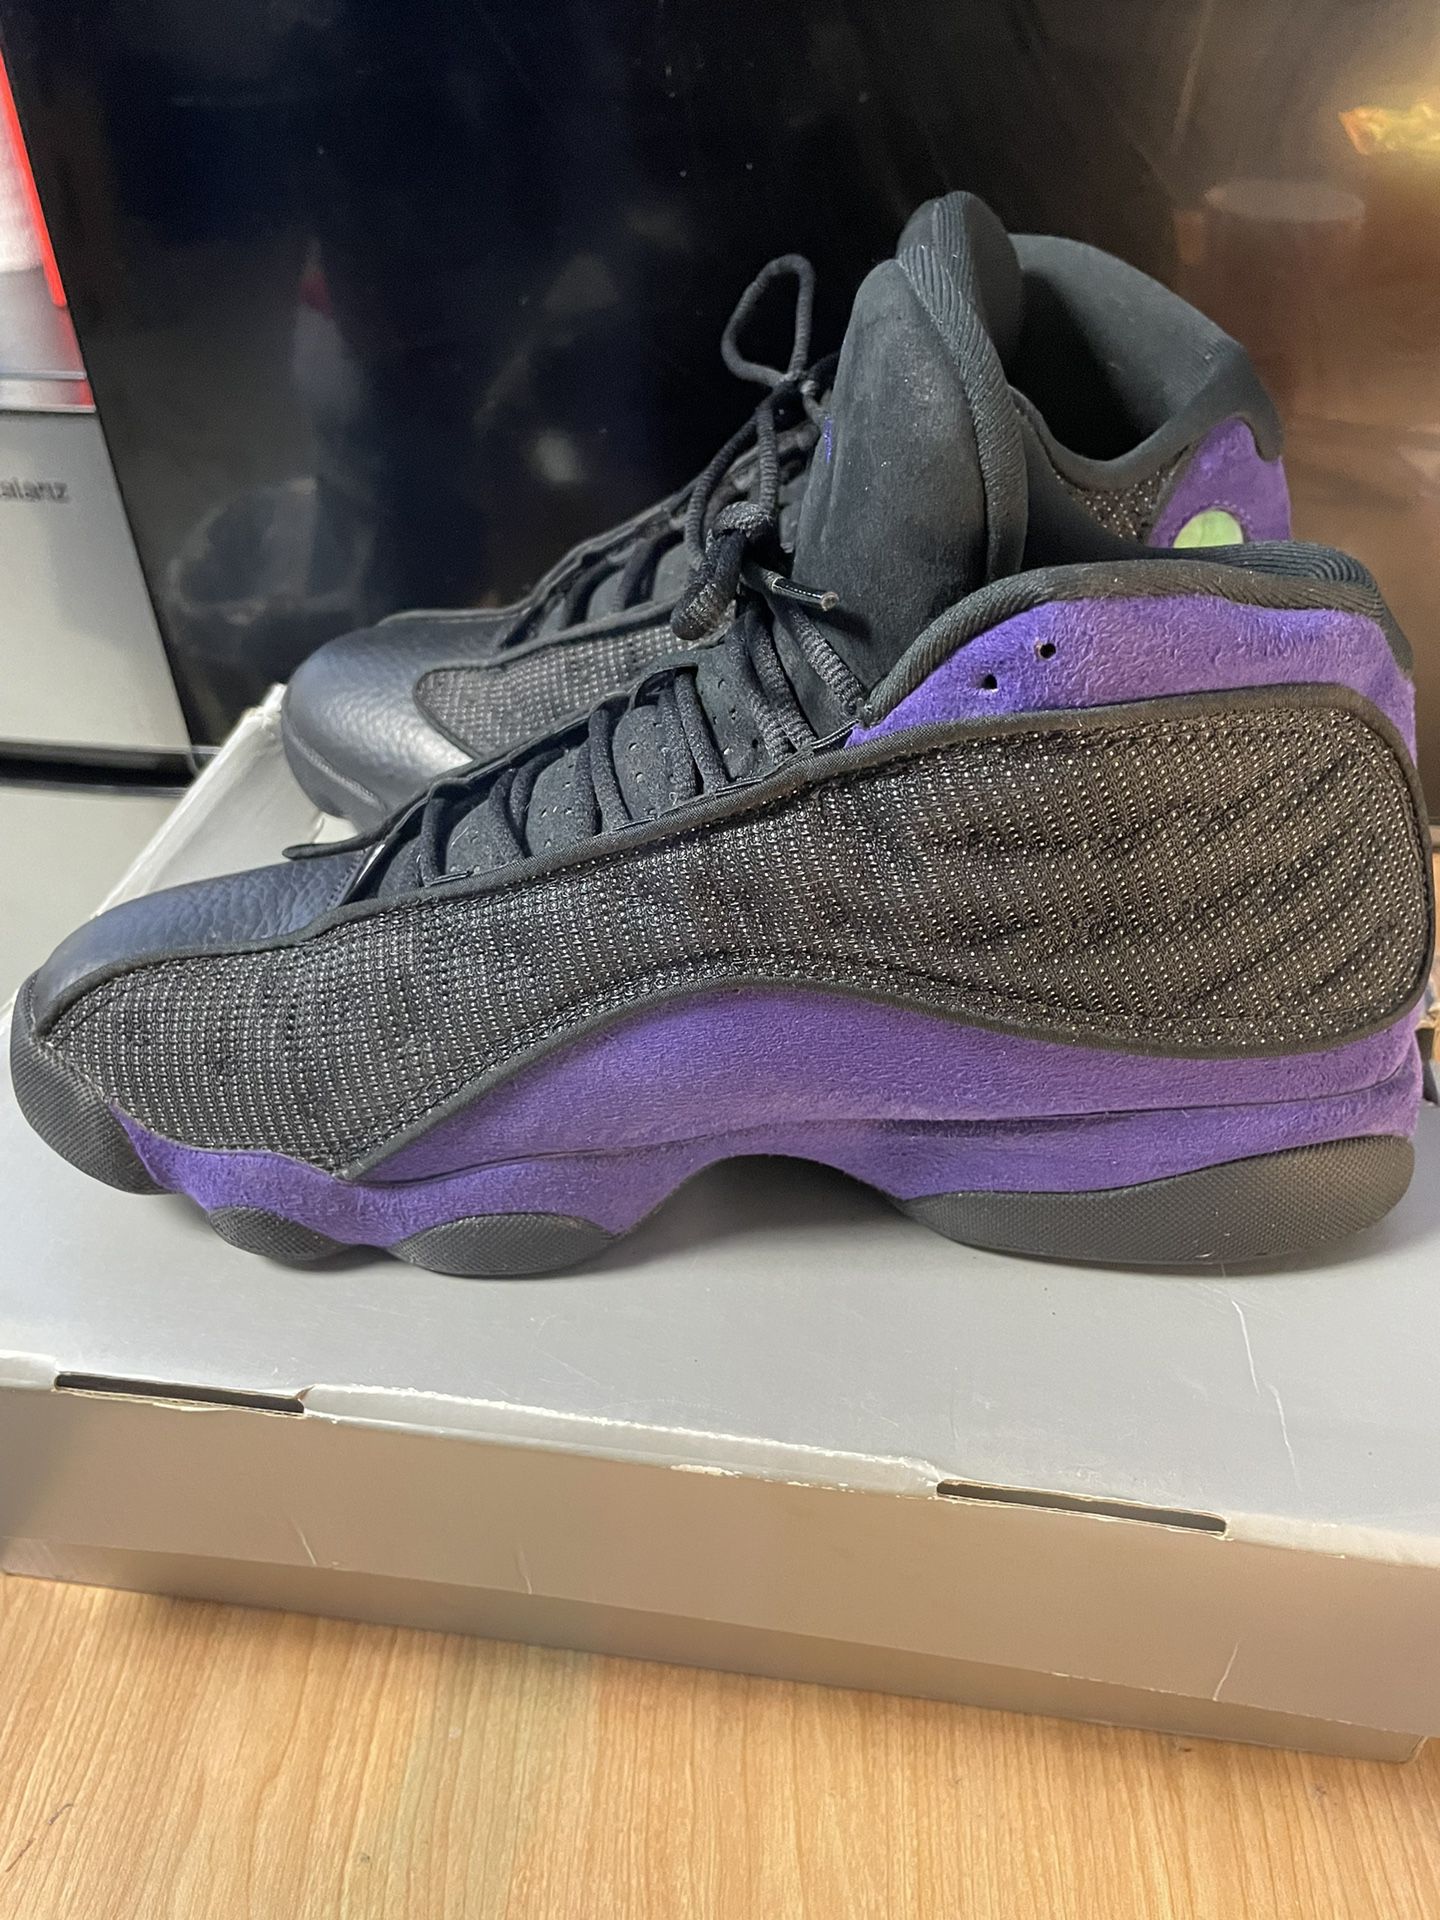 Size 11 M Jordan 13s Purple & Black 